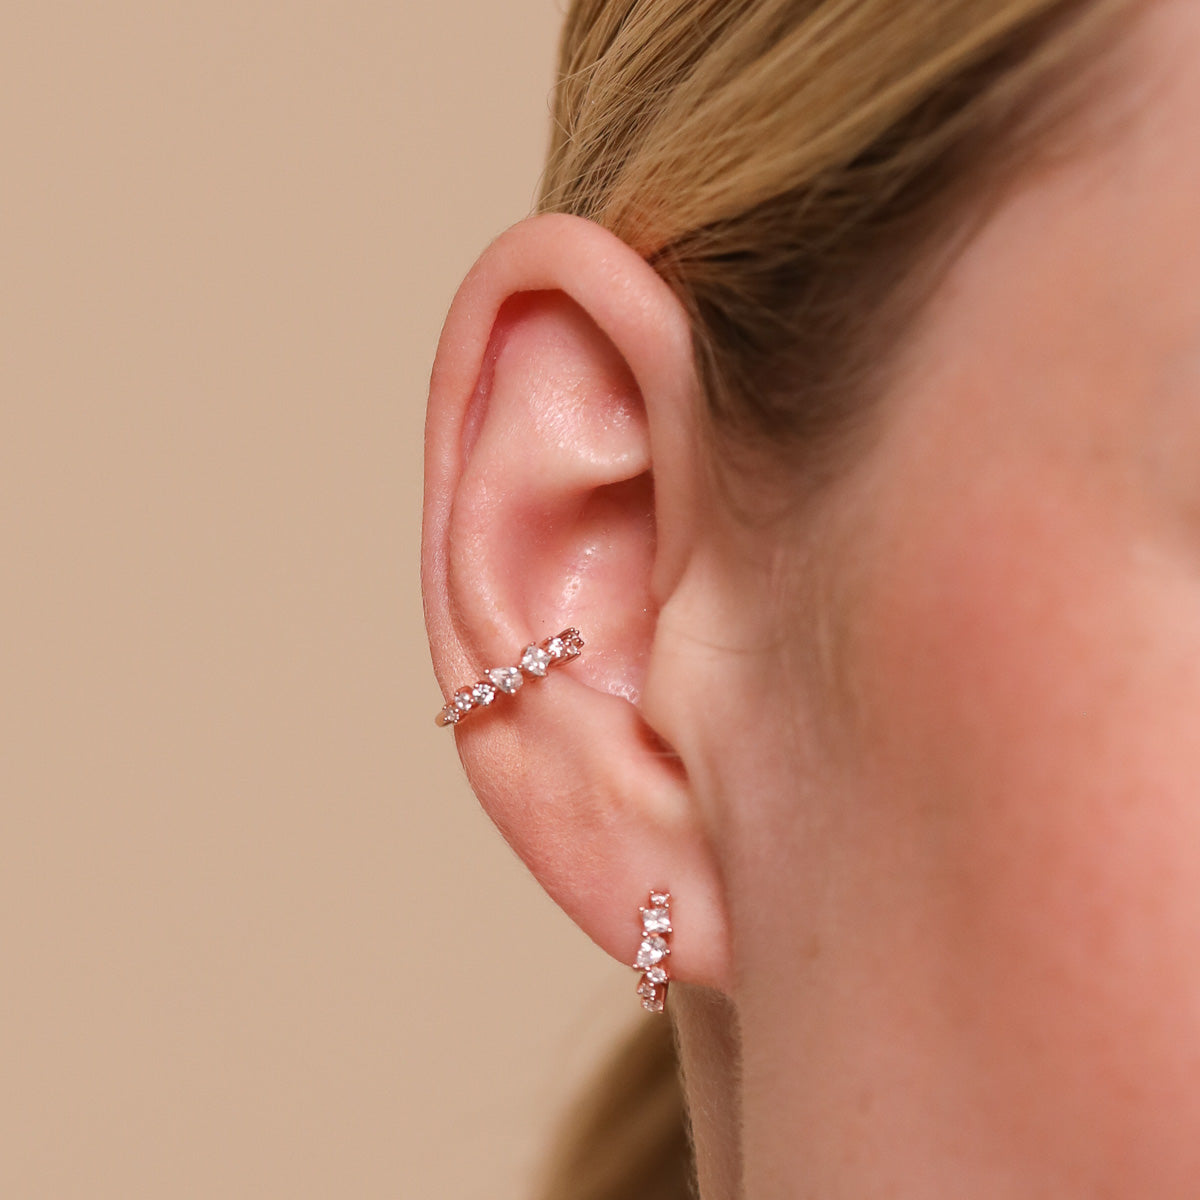 Celestial Crystal Ear Cuff in Rose Gold worn